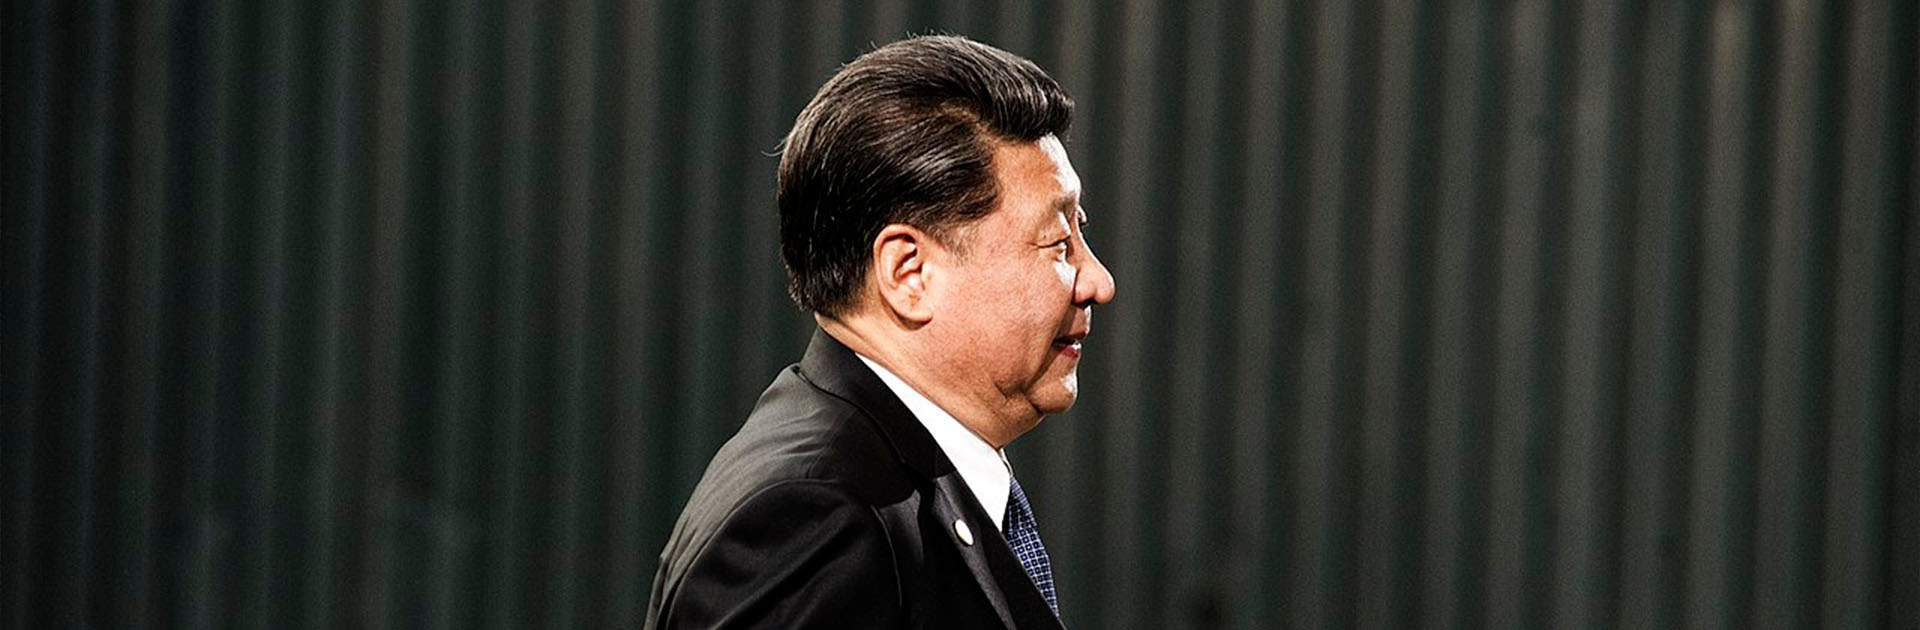 Repercusiones del 20º Congreso del Partido Comunista de China. Xi Jinping a su llegada a la COP21 en París (2015)